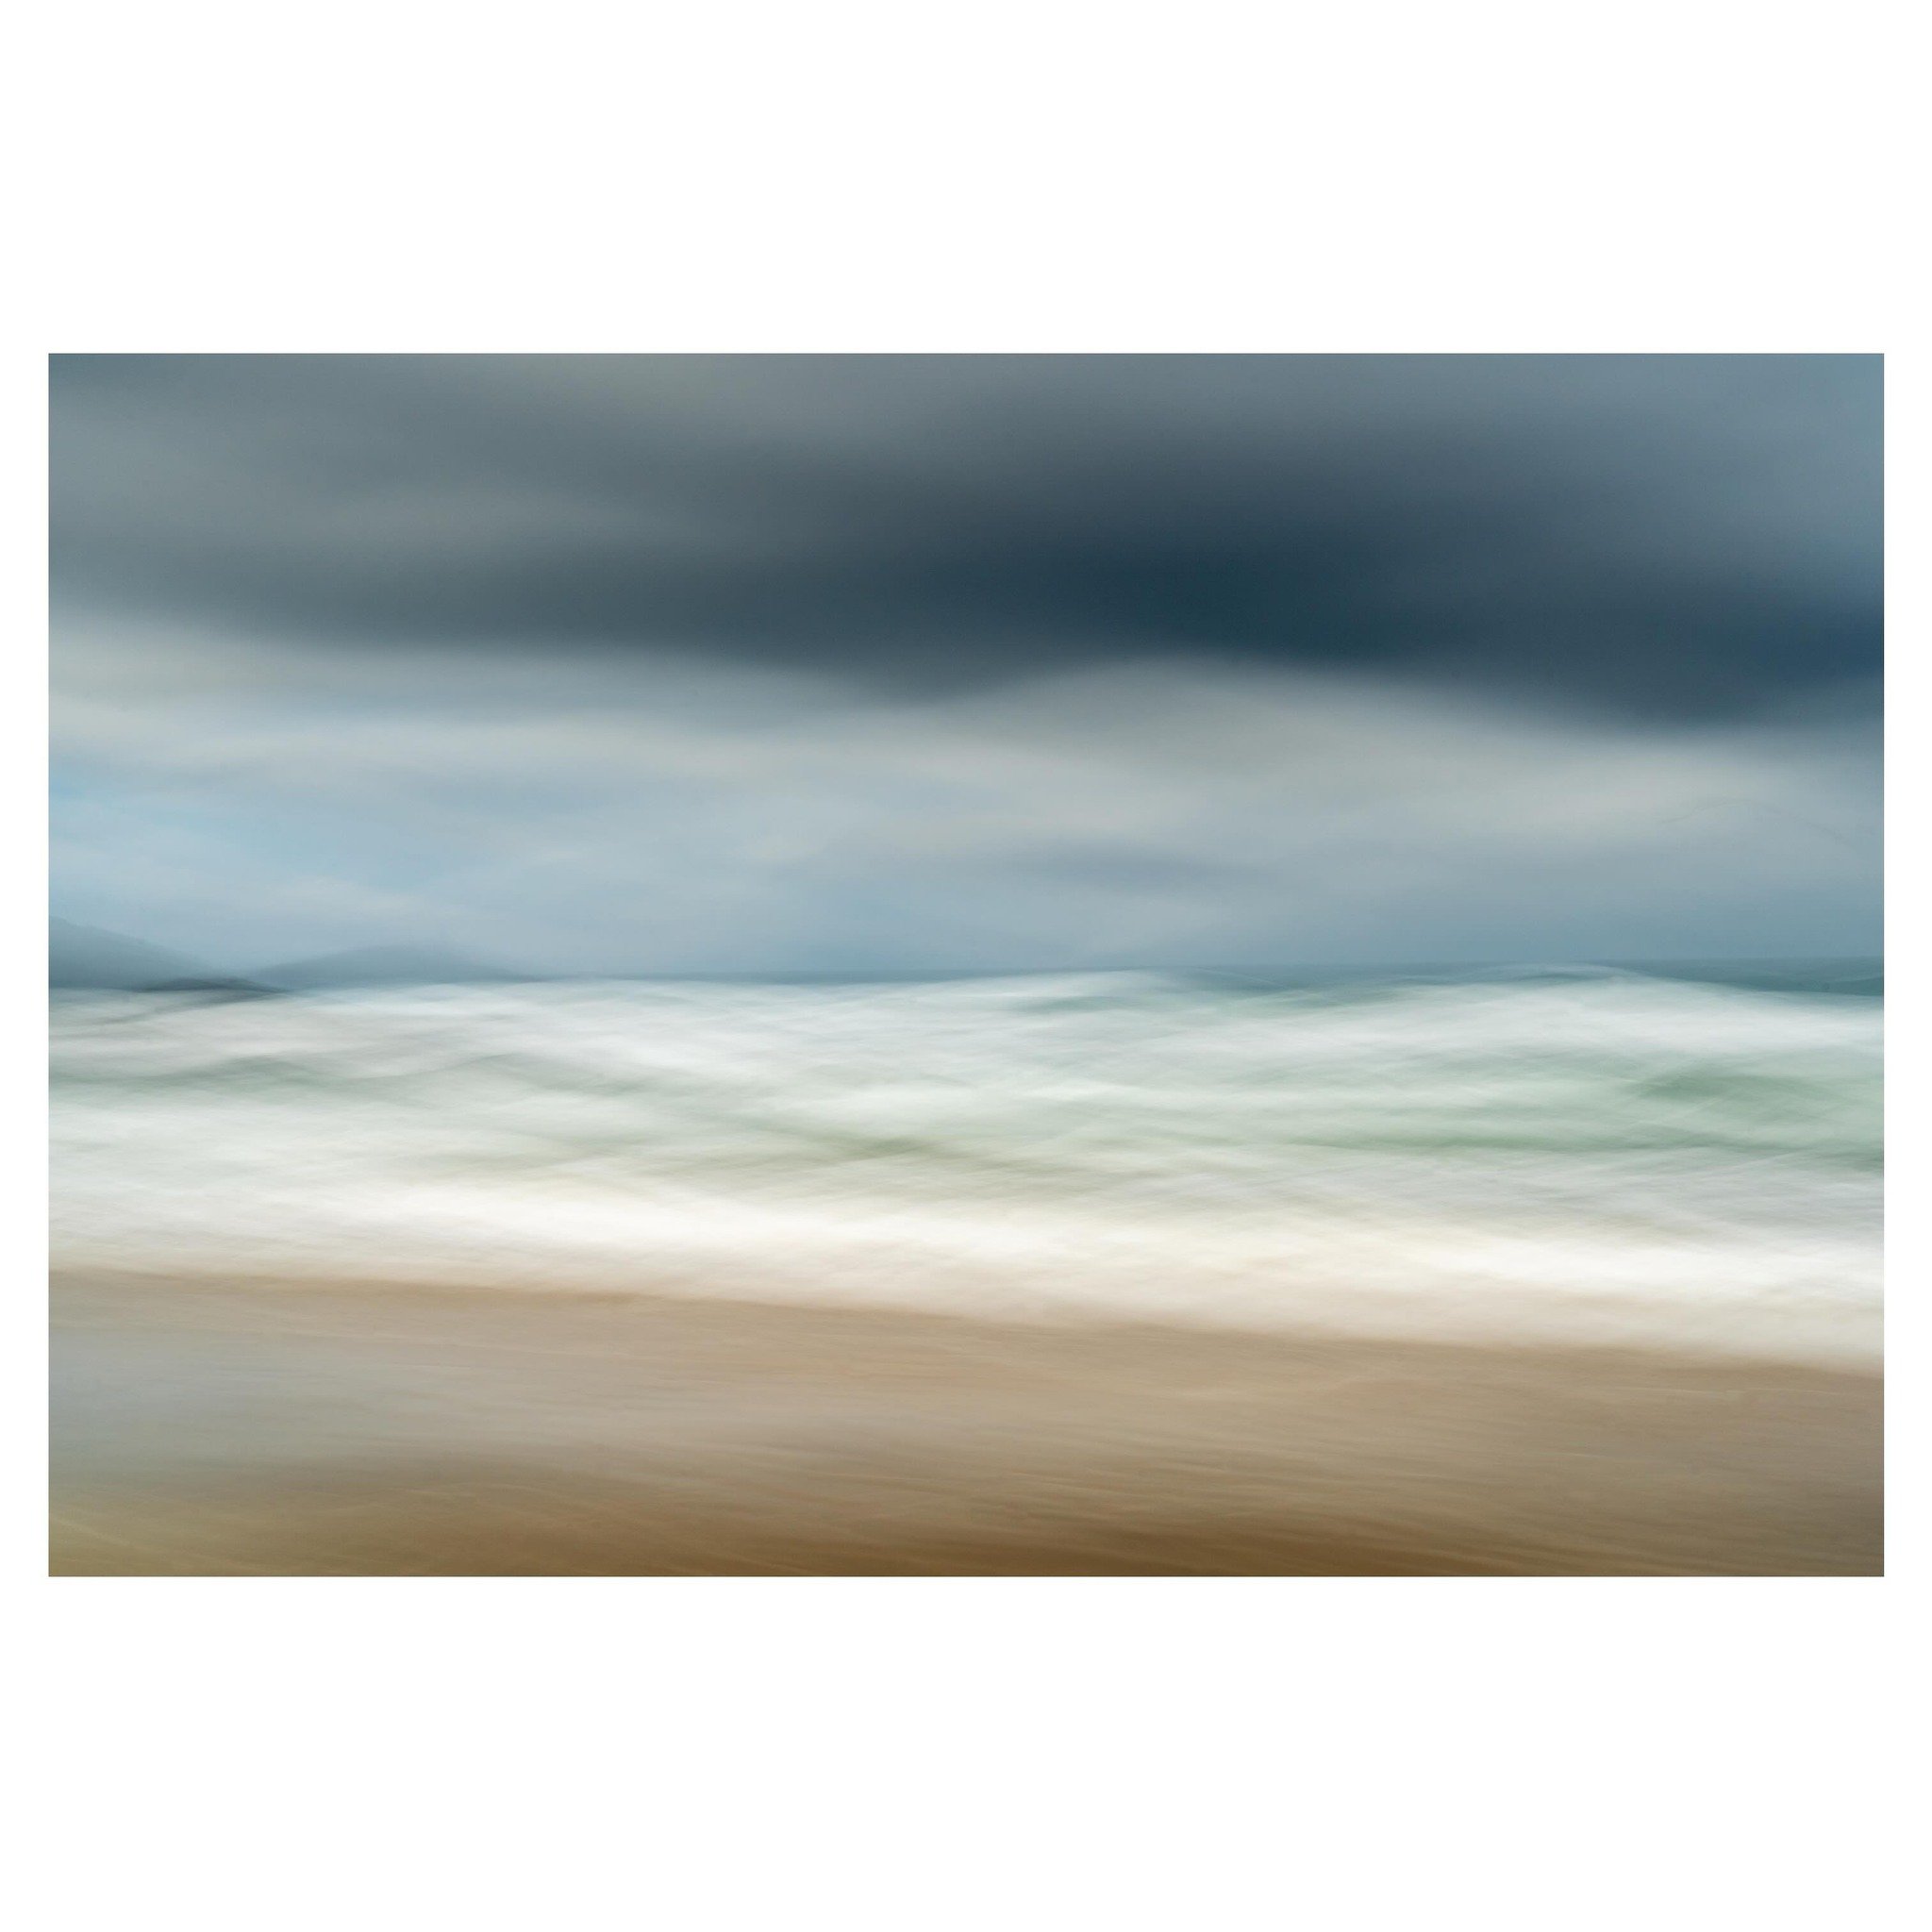 Rough Seas
.
.
.
.
.
#seascape #landscapeinmotion #waves #ocean #icm #impressionism #icmphotography #coastalphotography #icmphotomag #icm #icm_community #seascapephotography #coloursofnature #coastal #outdoorphotographymagazine #cornwall #fineartphot